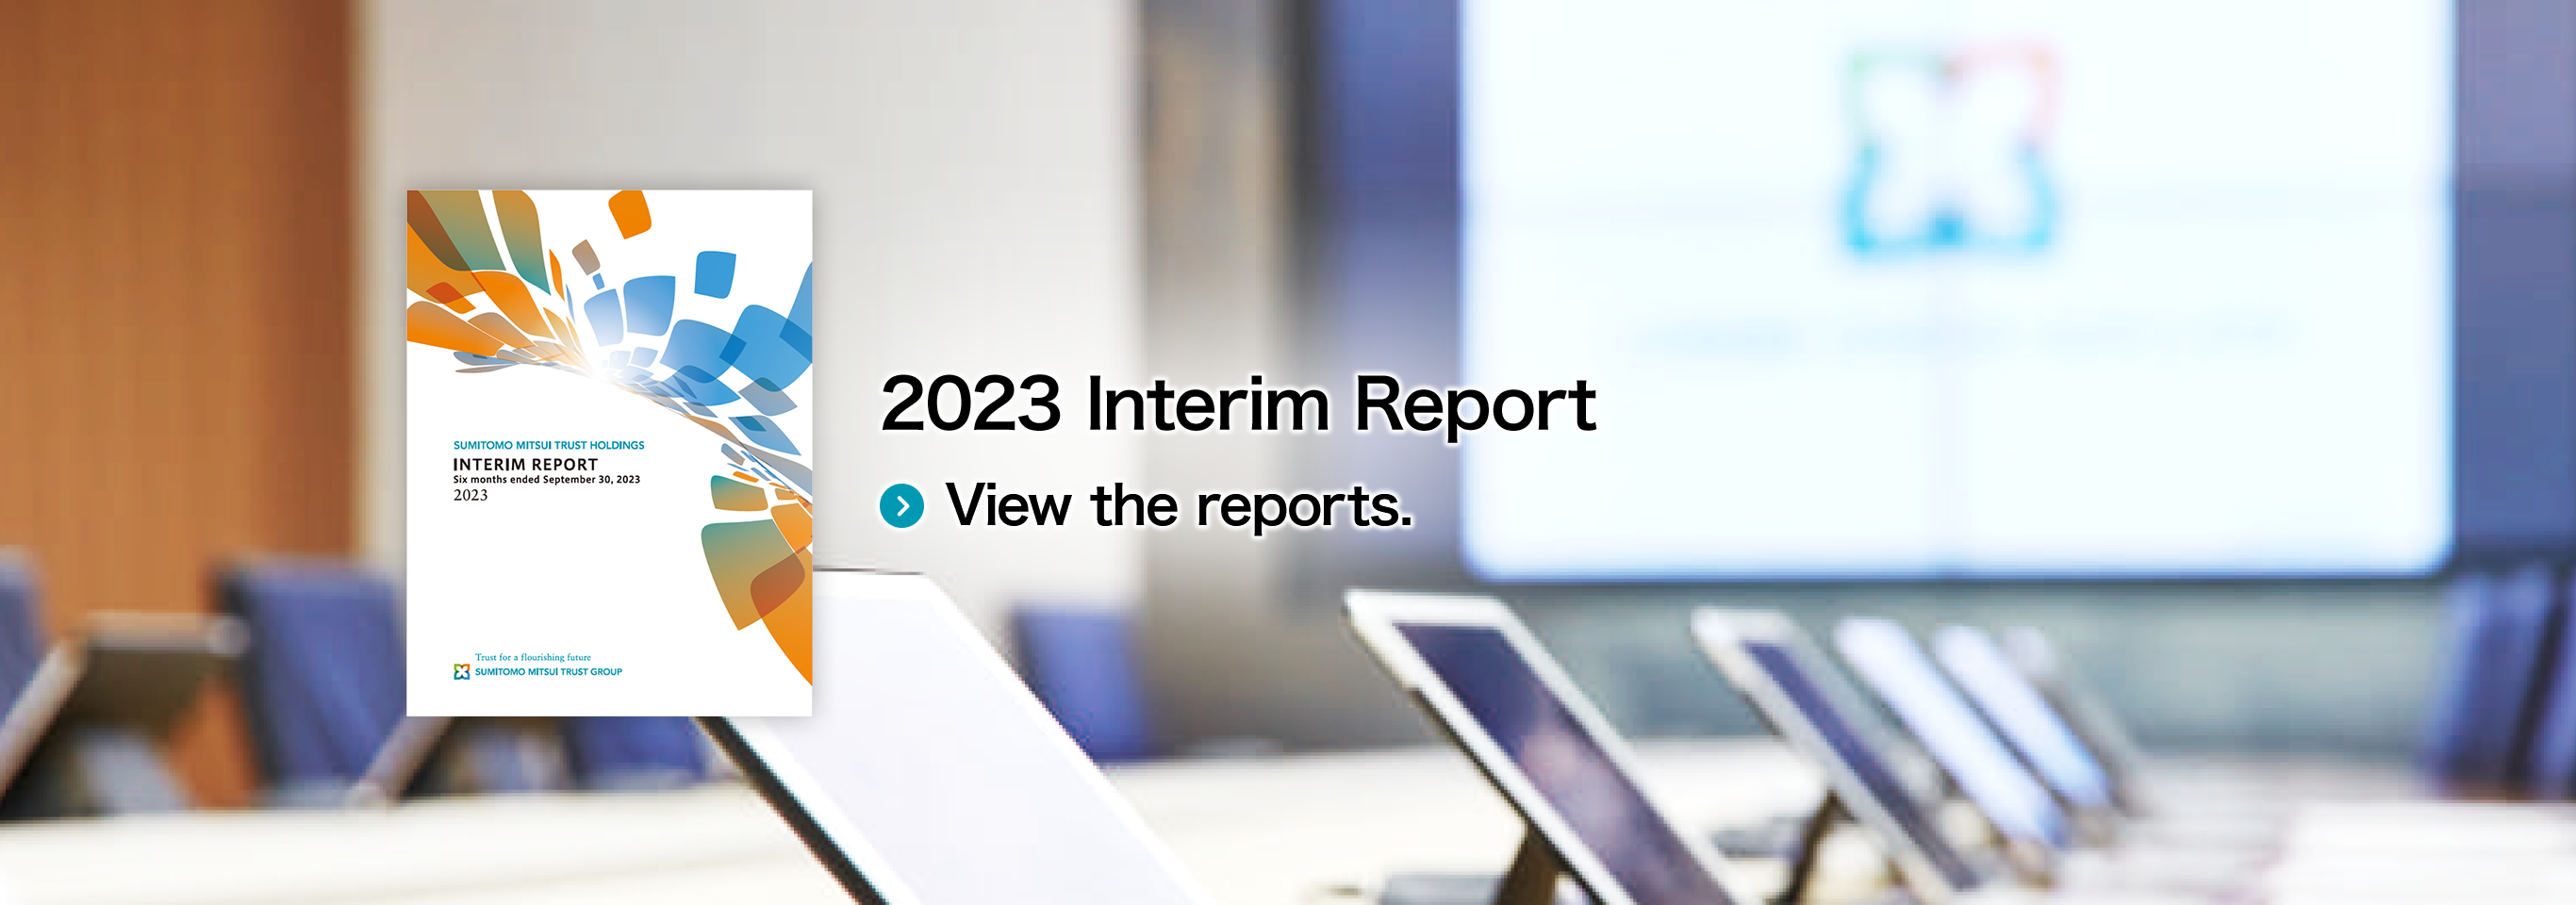 2022 Interim Report View the reports.